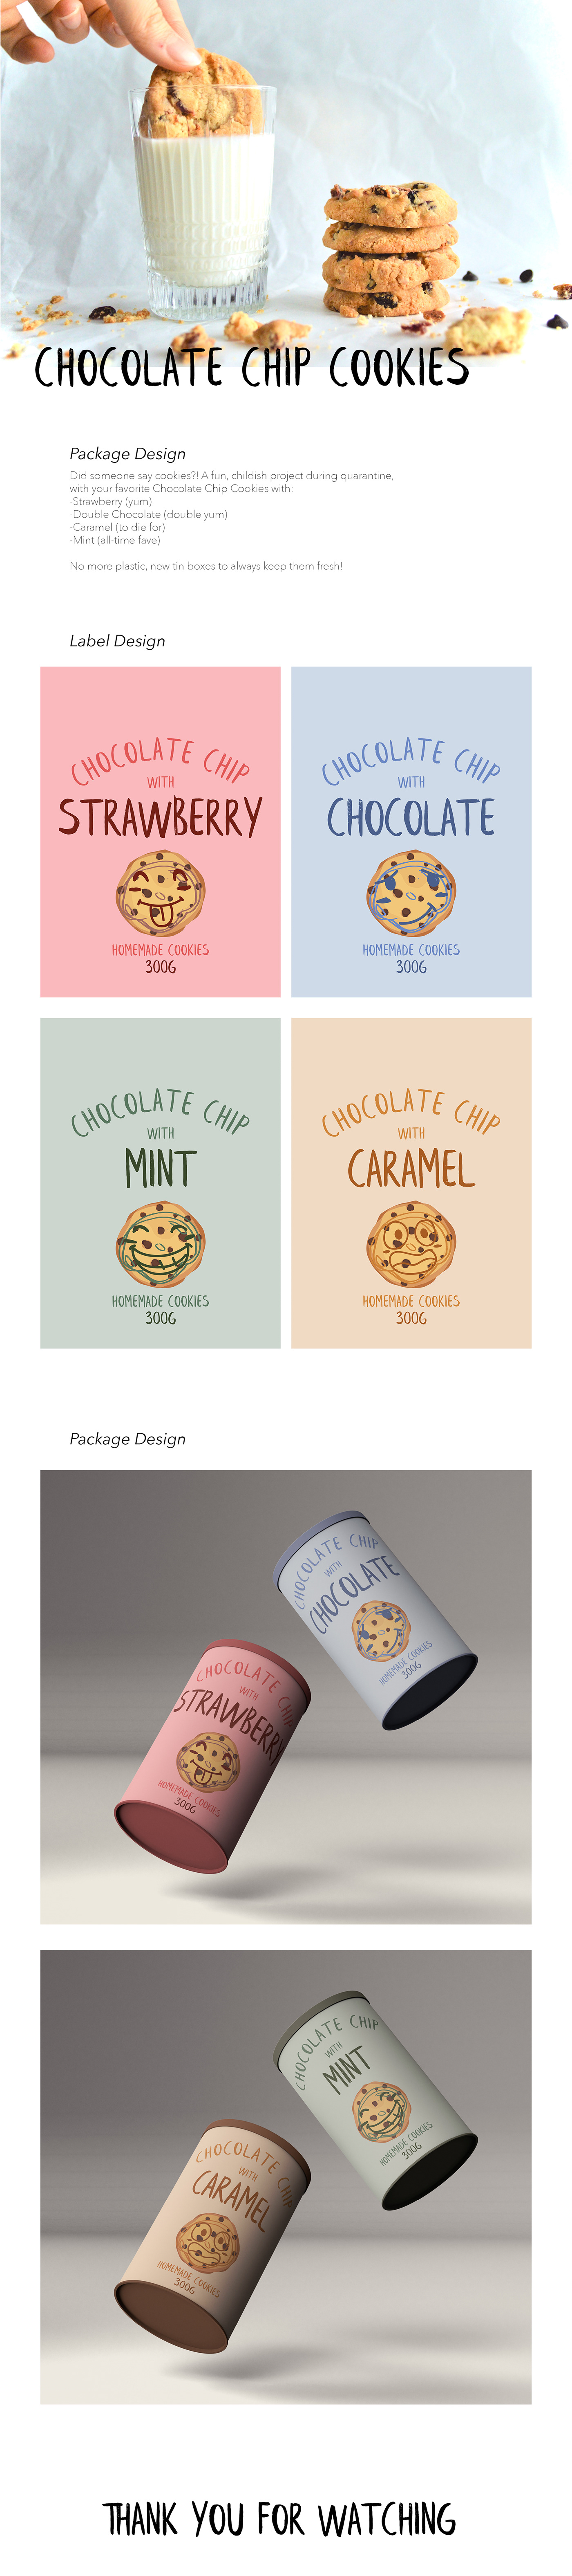 cookies graphic design  Graphic Designer label design package design  Packaging chocolatechip